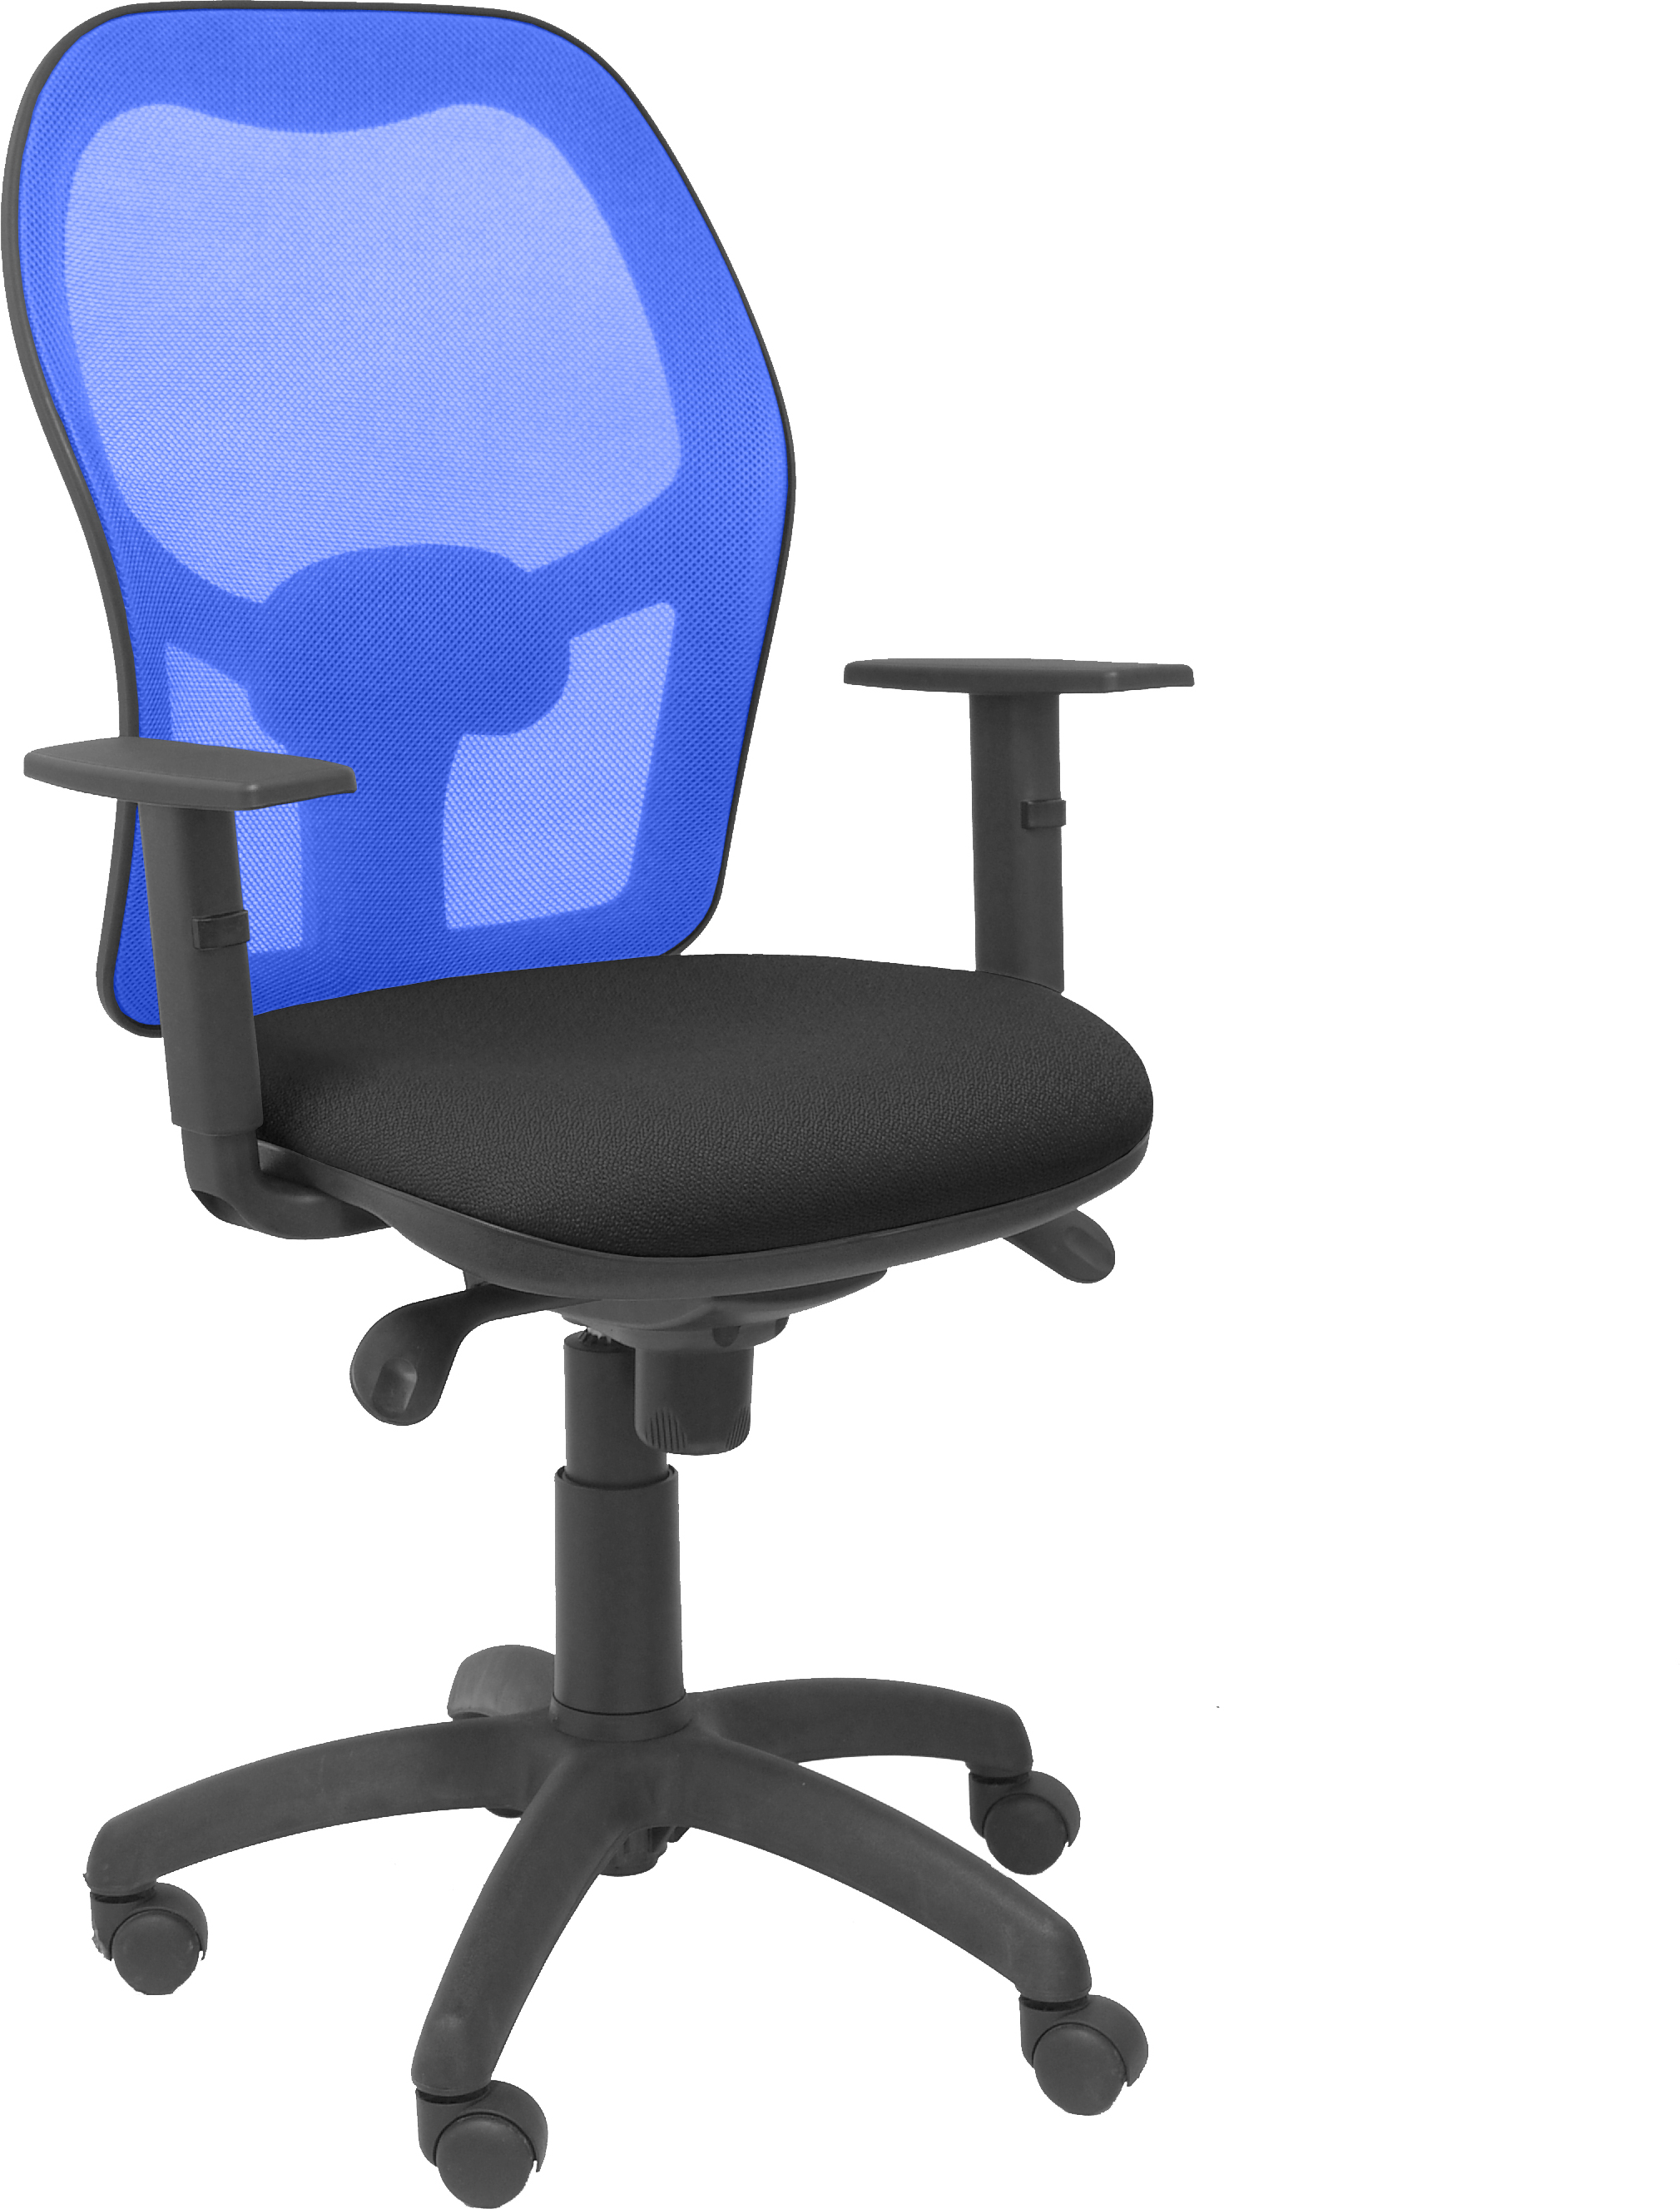 Silla De Escritorio operativa pyc jorquera negro brazos ajustables malla oficina piqueras y crespo modelo tejido bali 1 15sabali840 azul